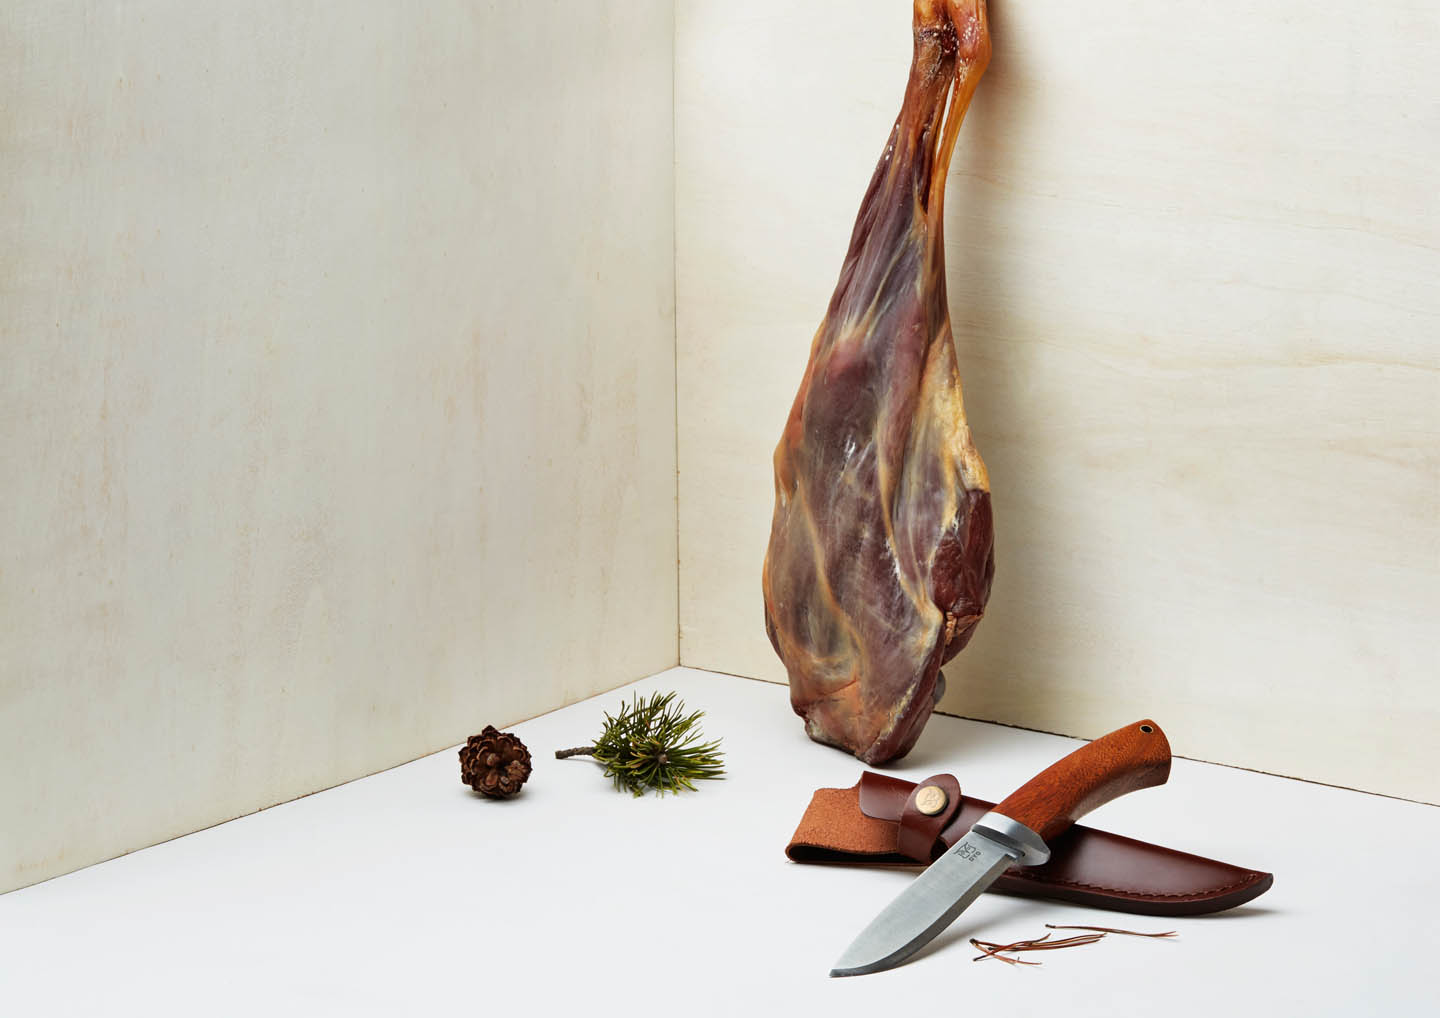 Øyo knife and meat